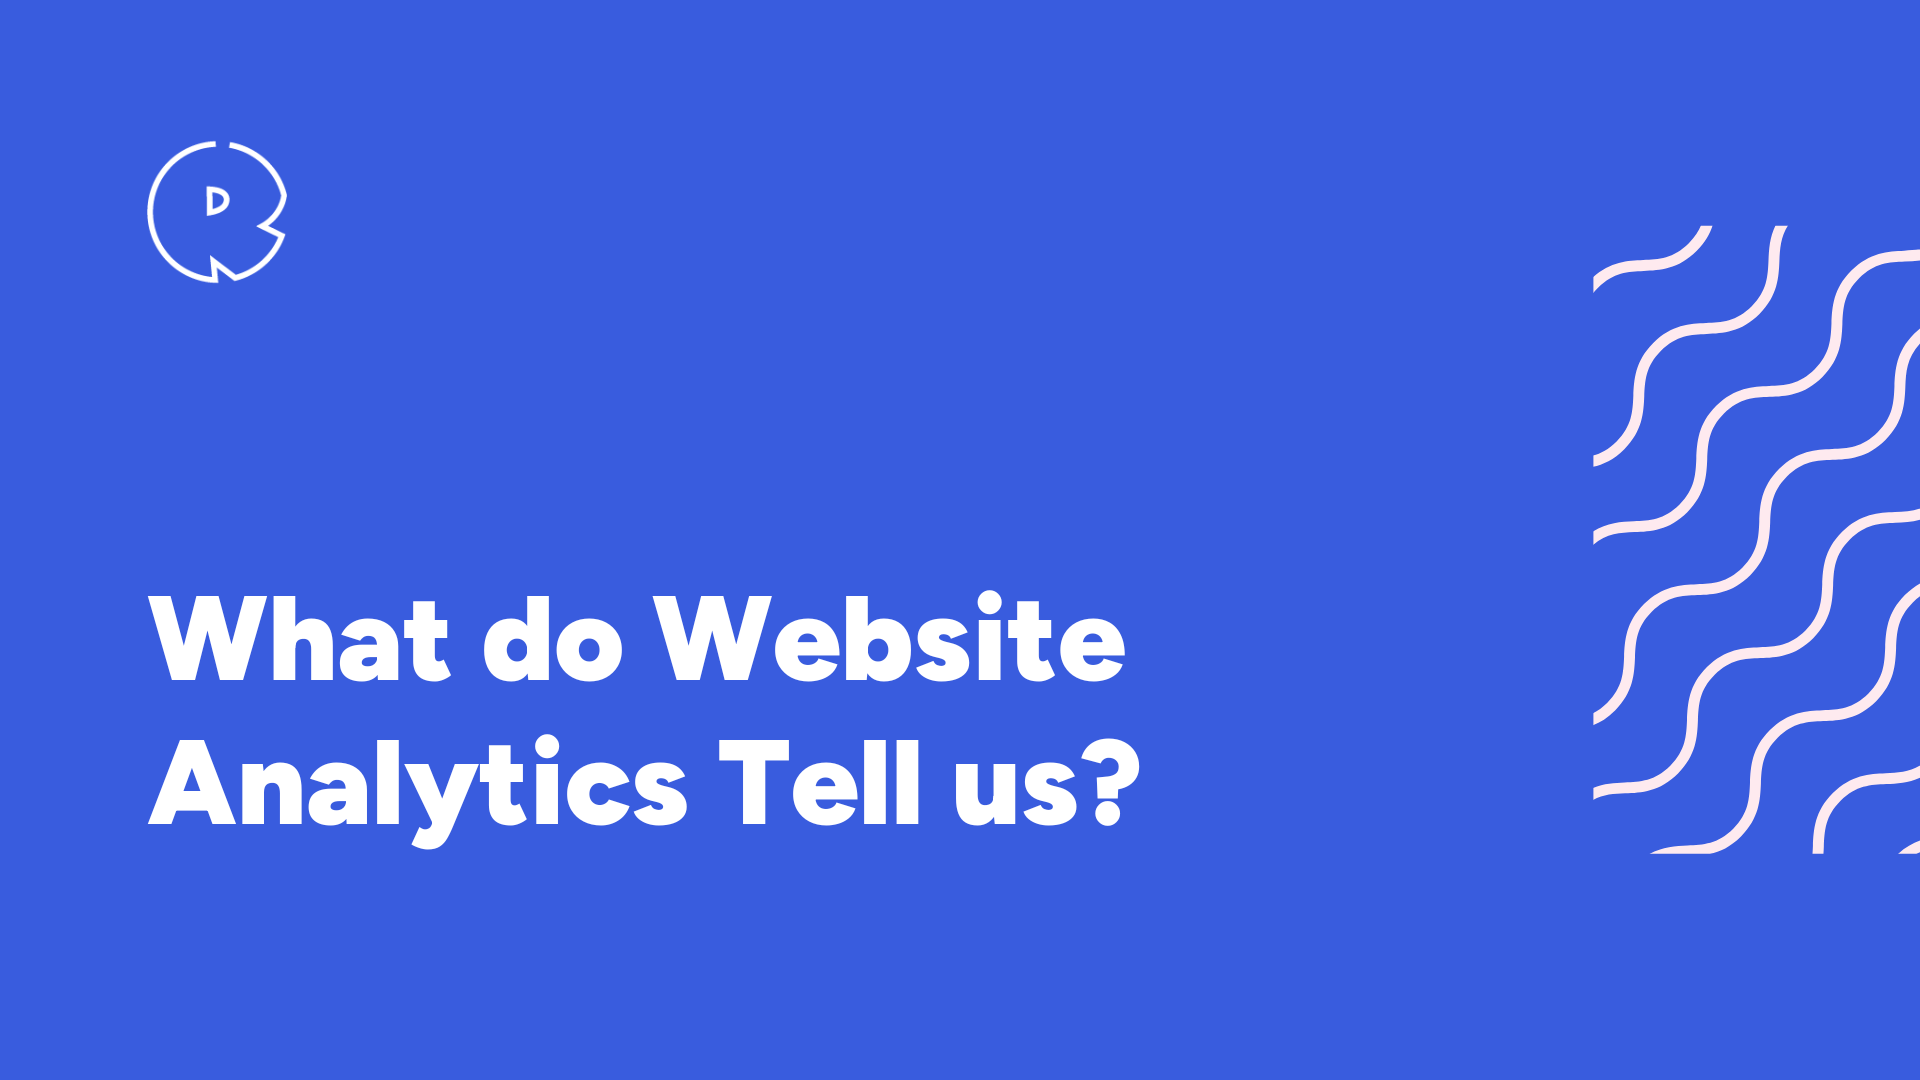 What do Website Analytics Tell us?